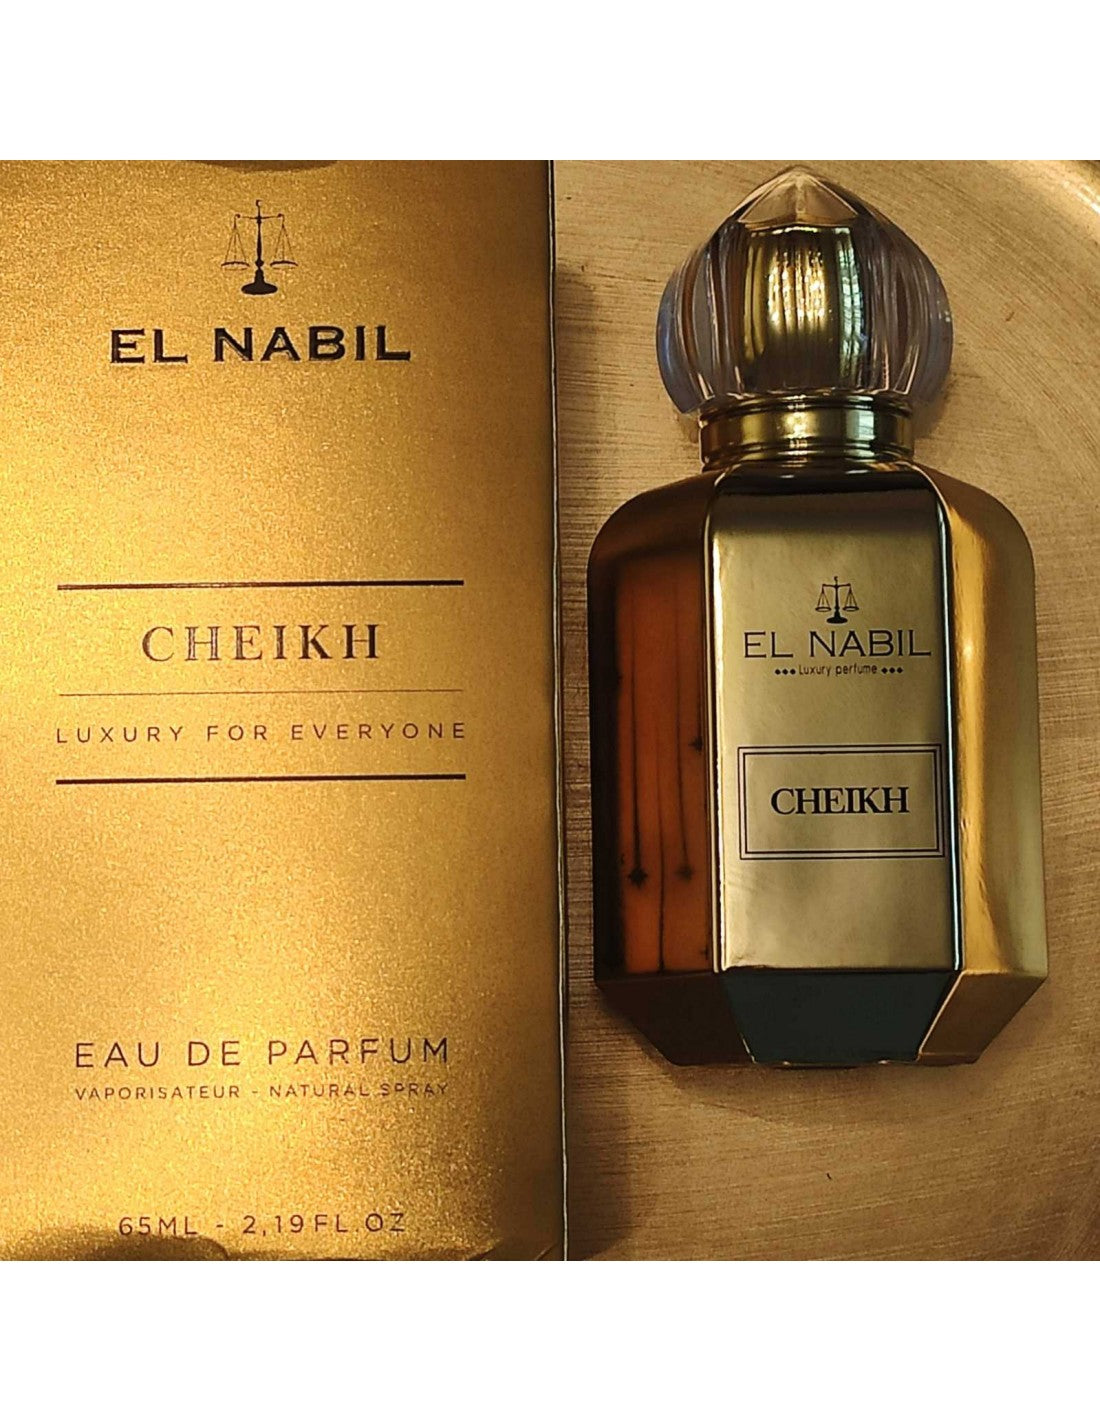 Eau de parfum Cheikh 65ml – El Nabil